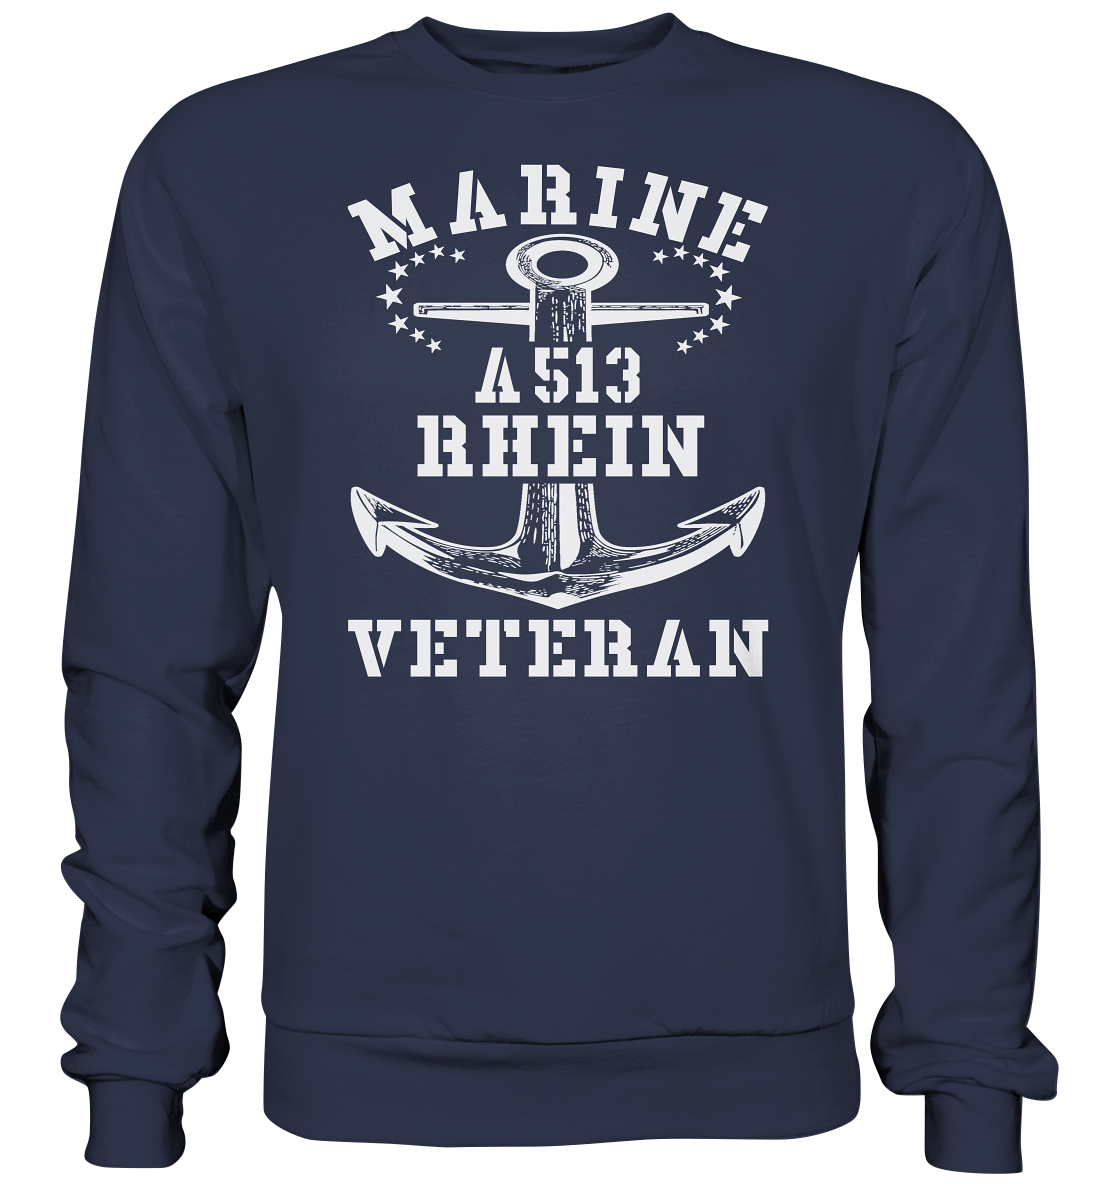 Tender A513 RHEIN Marine Veteran - Premium Sweatshirt